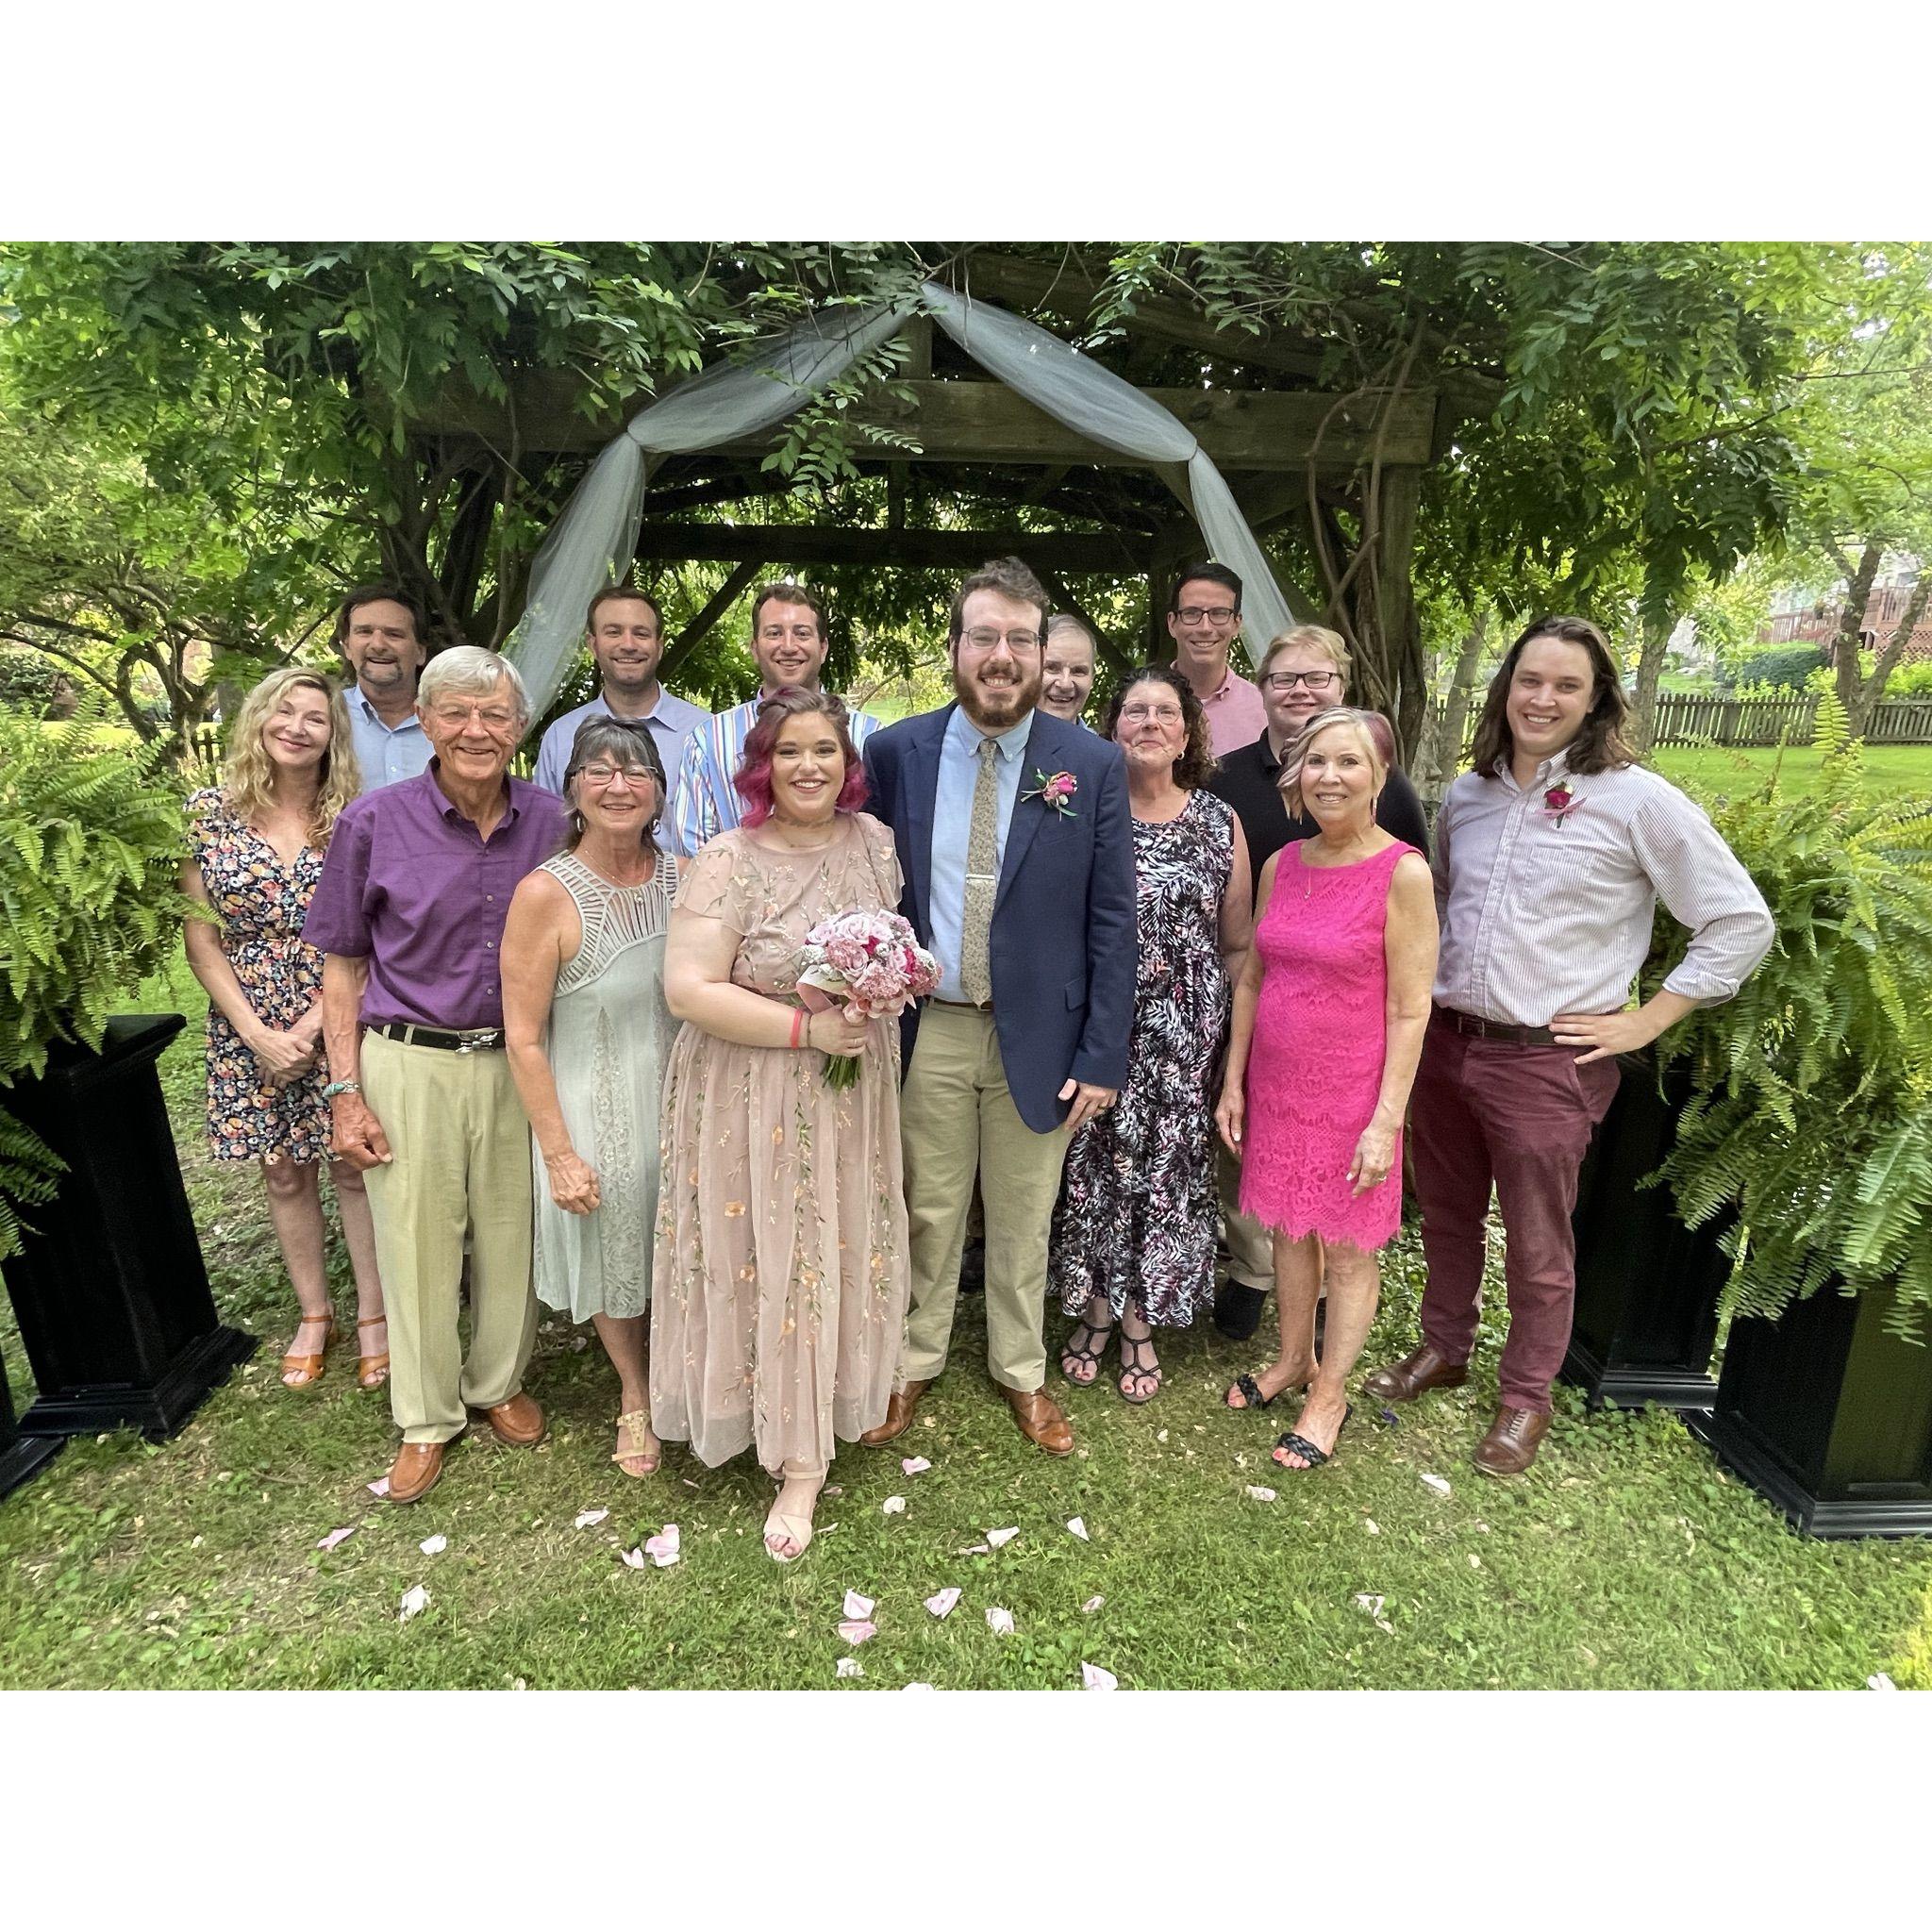 Our backyard wedding attendees, June 2021